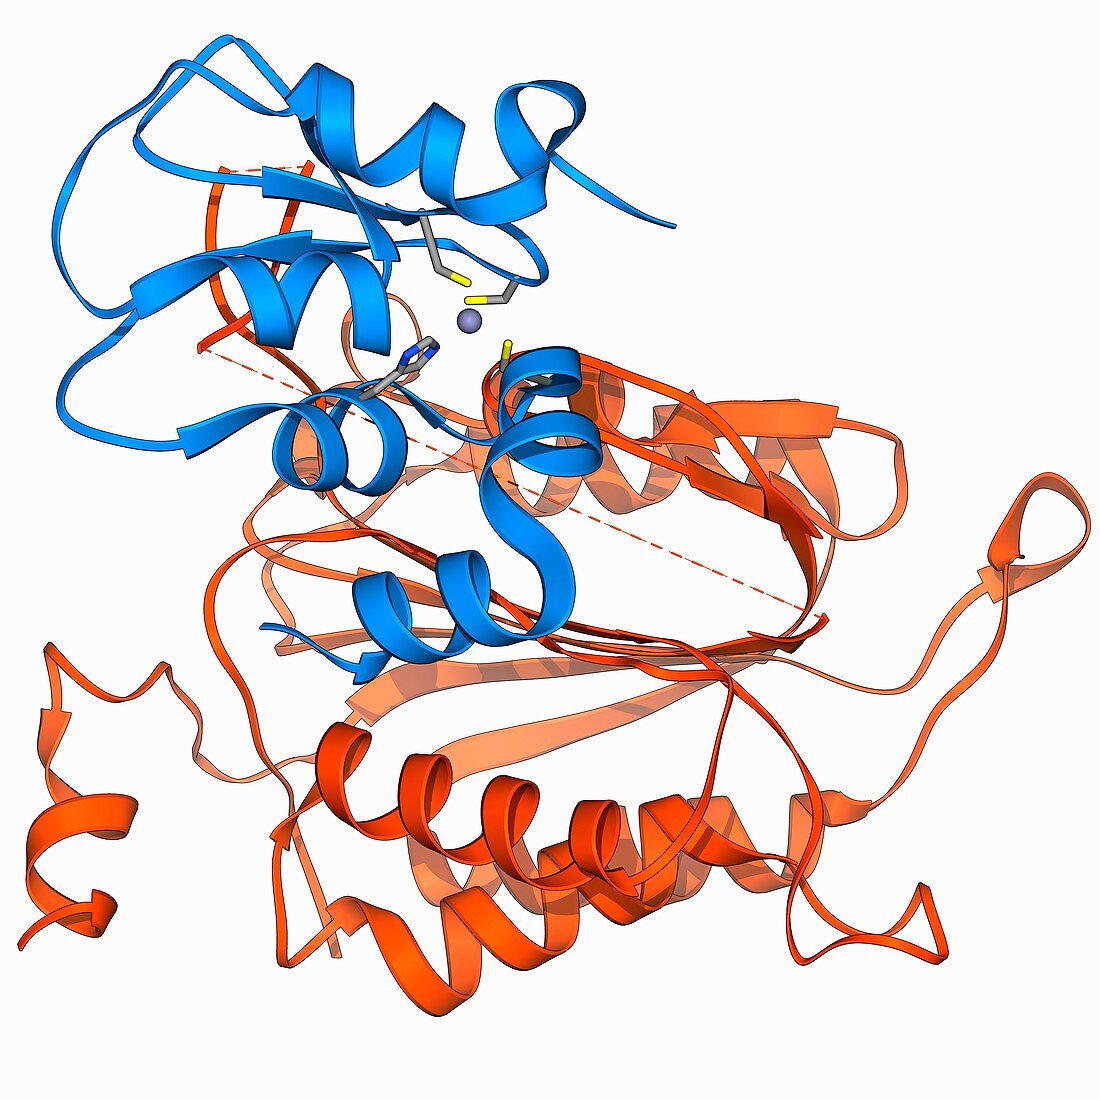 Caspase-9 with inhibitor,molecular model